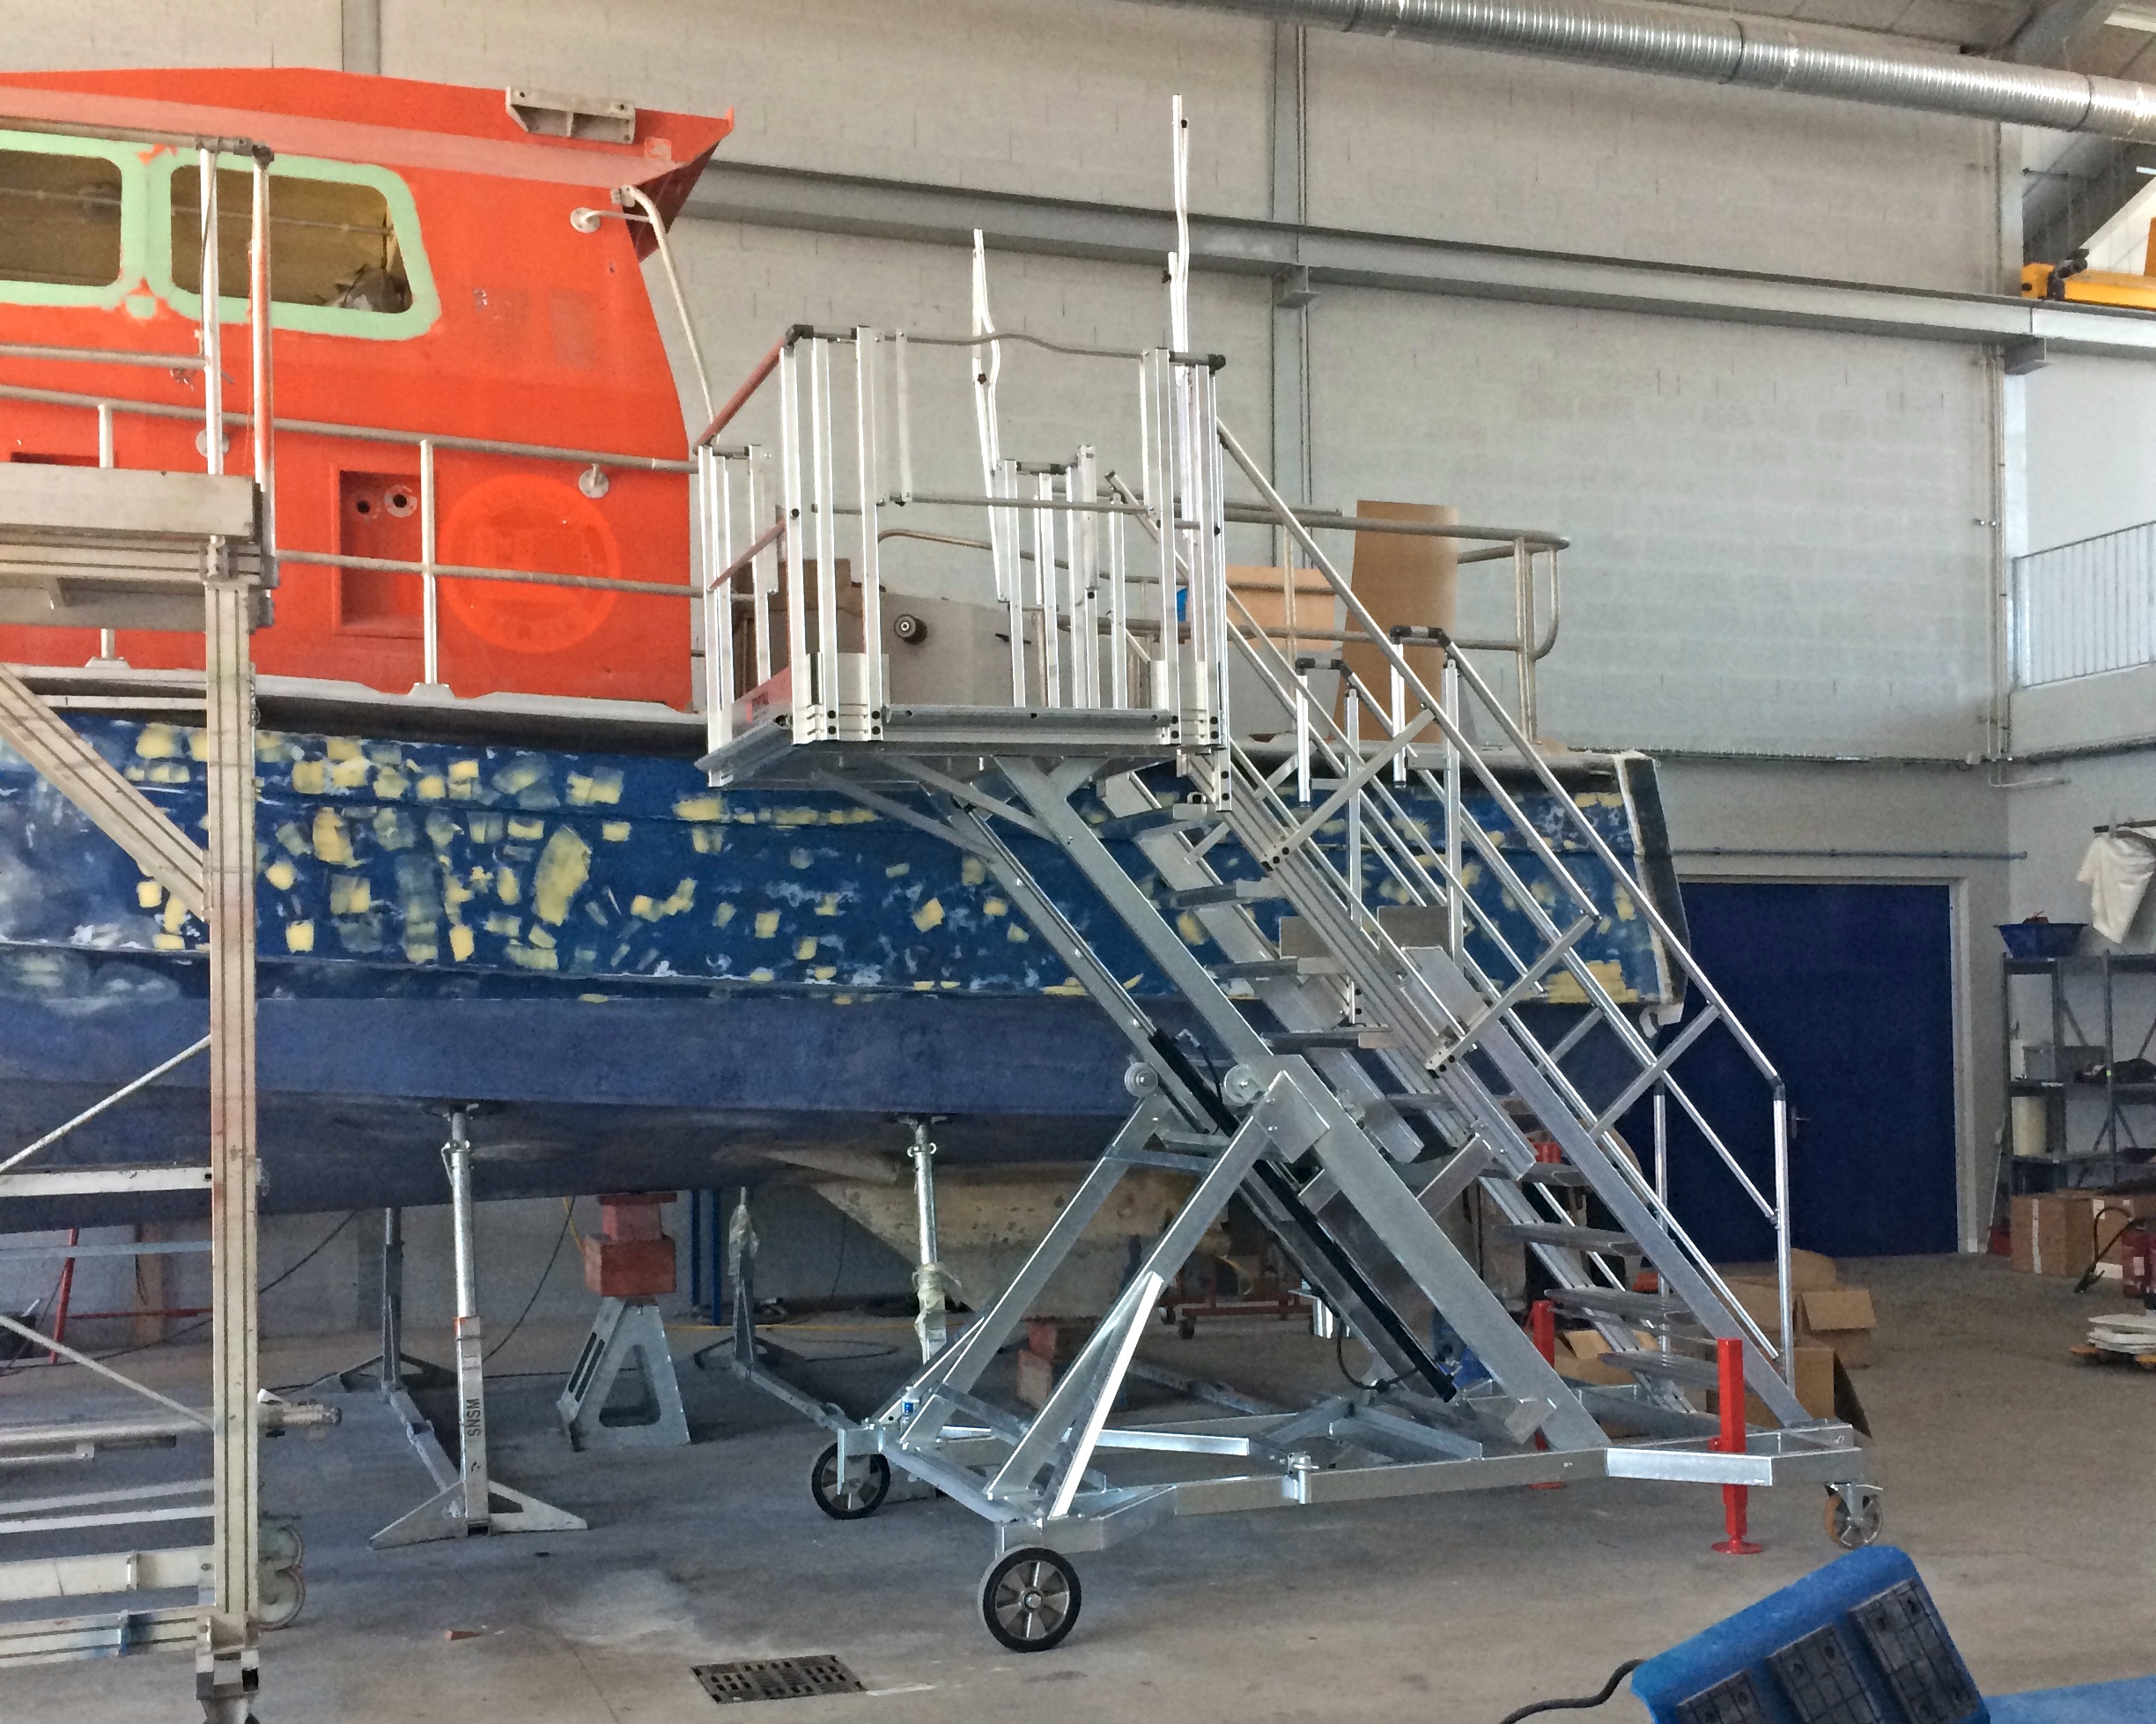 Adjustable in height platform for boats maintenance